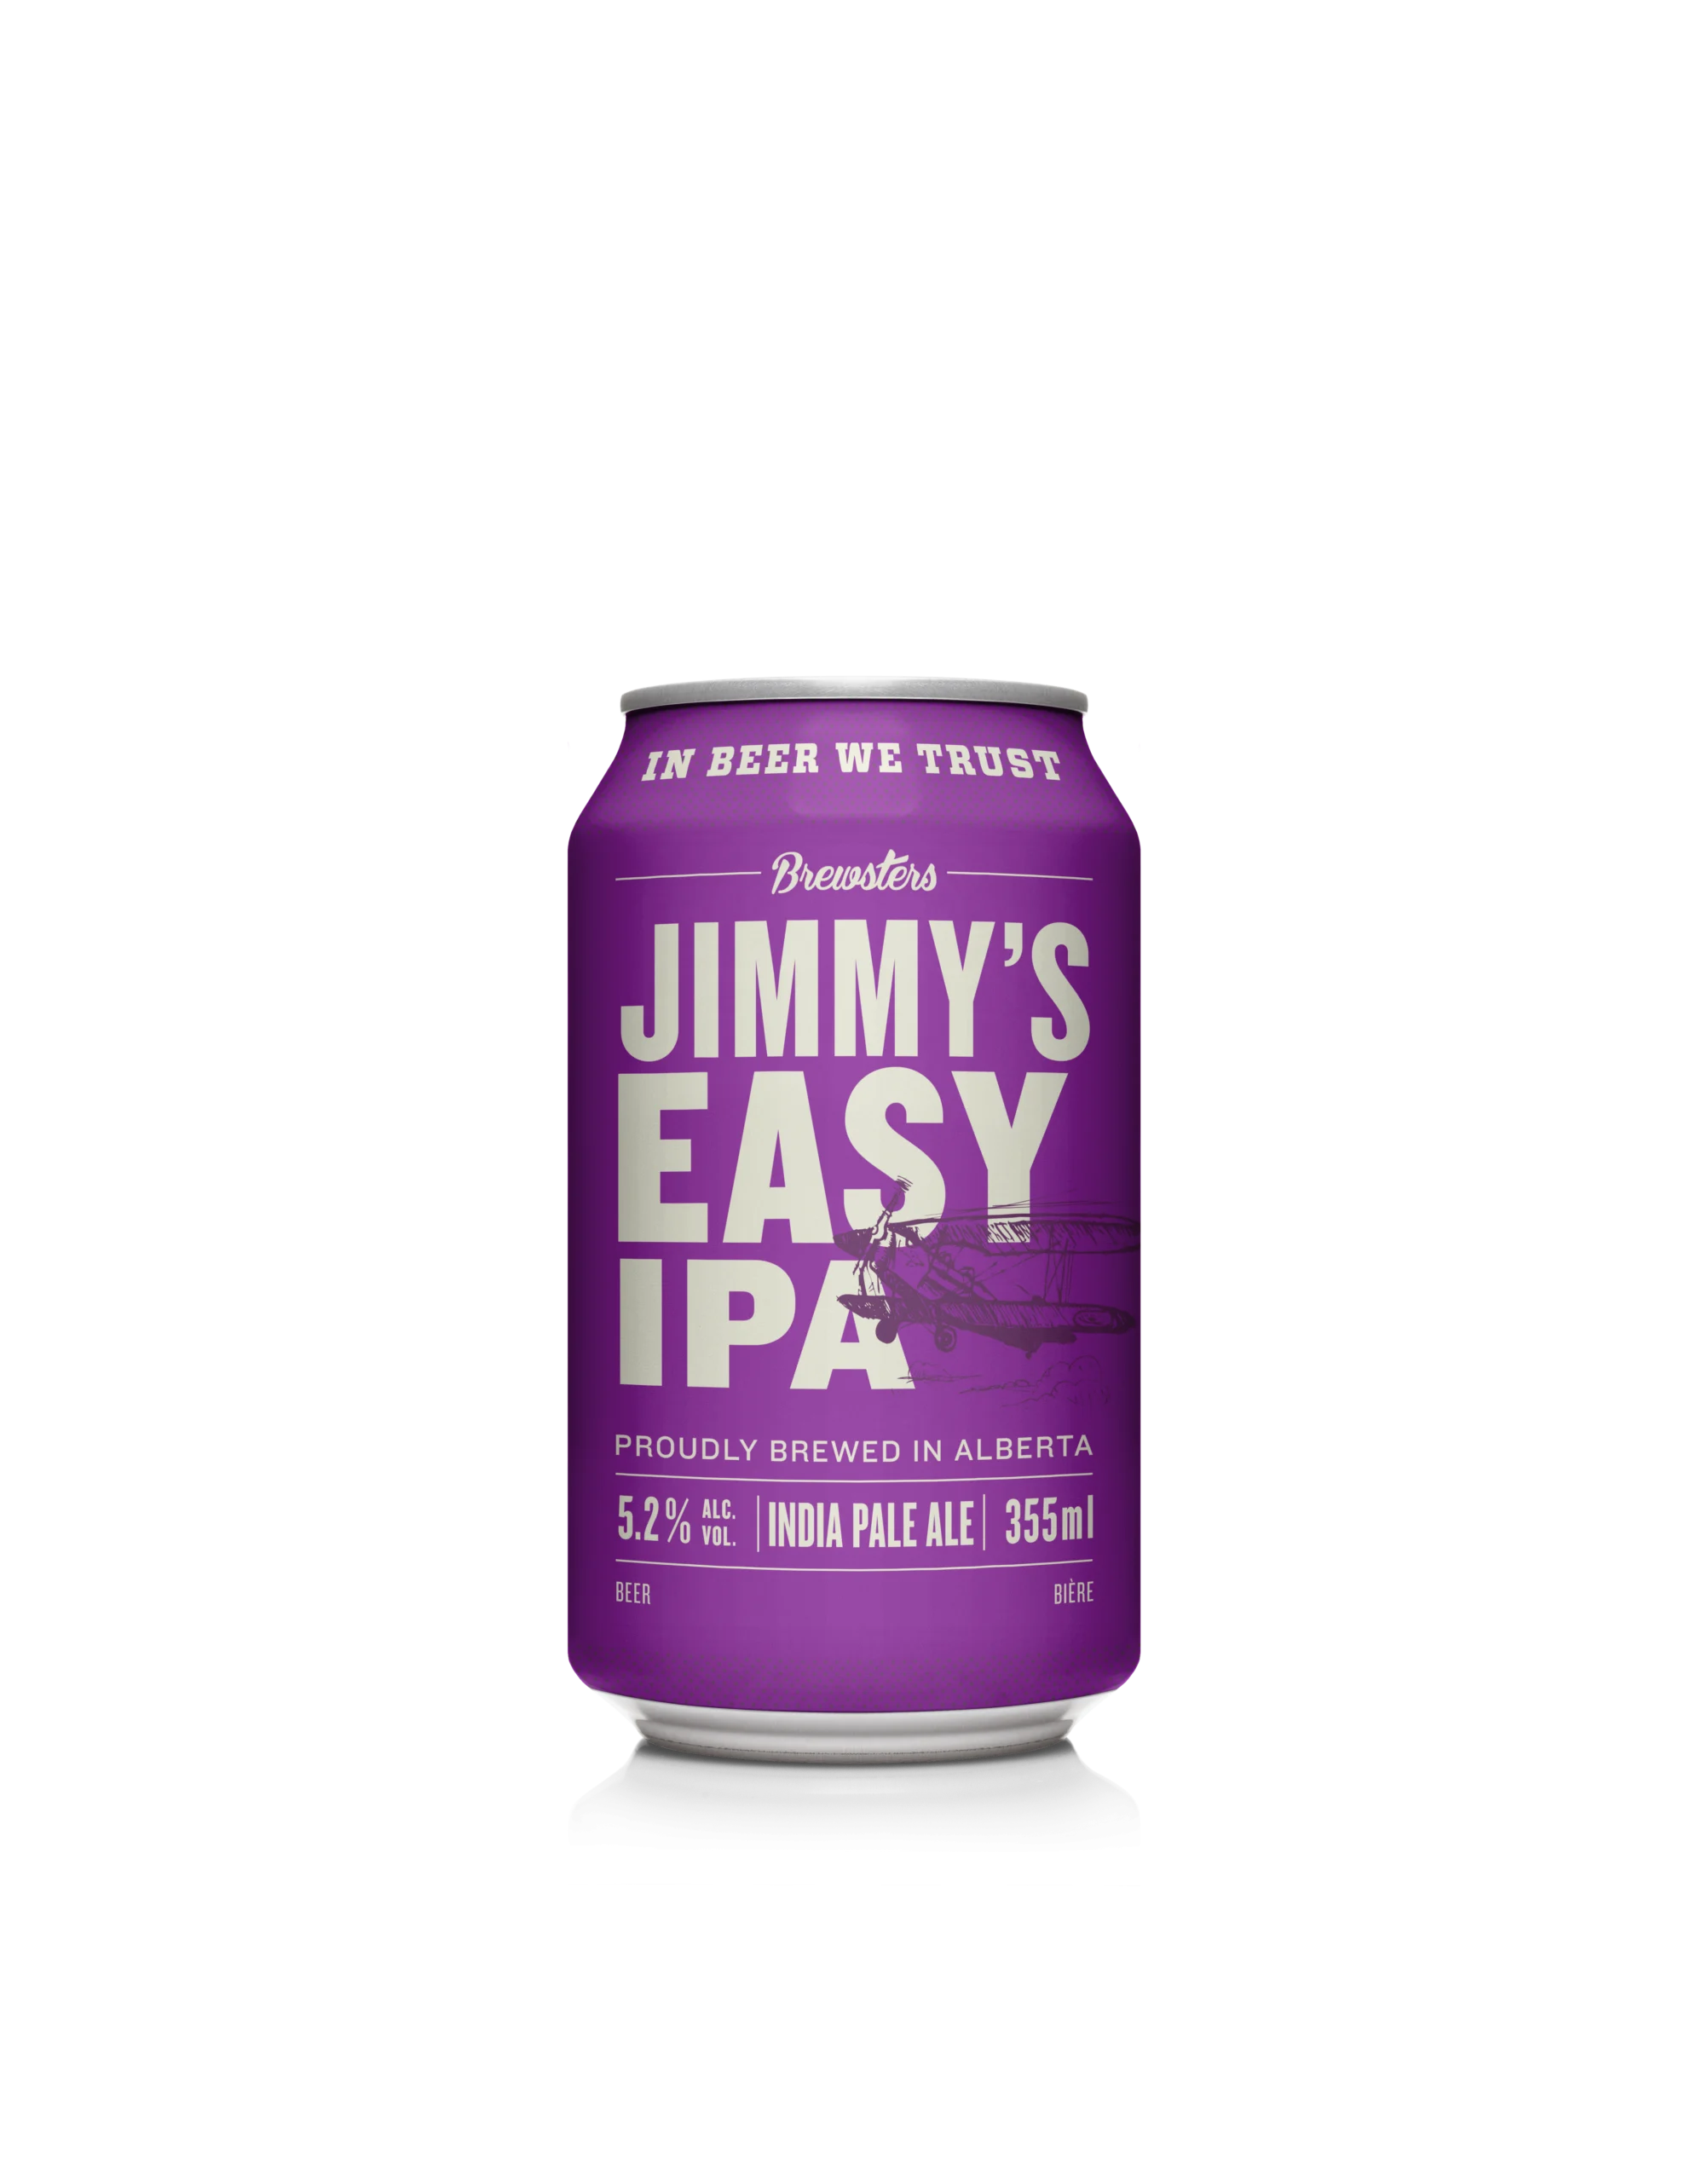 Jimmy's easy IPA beer can render